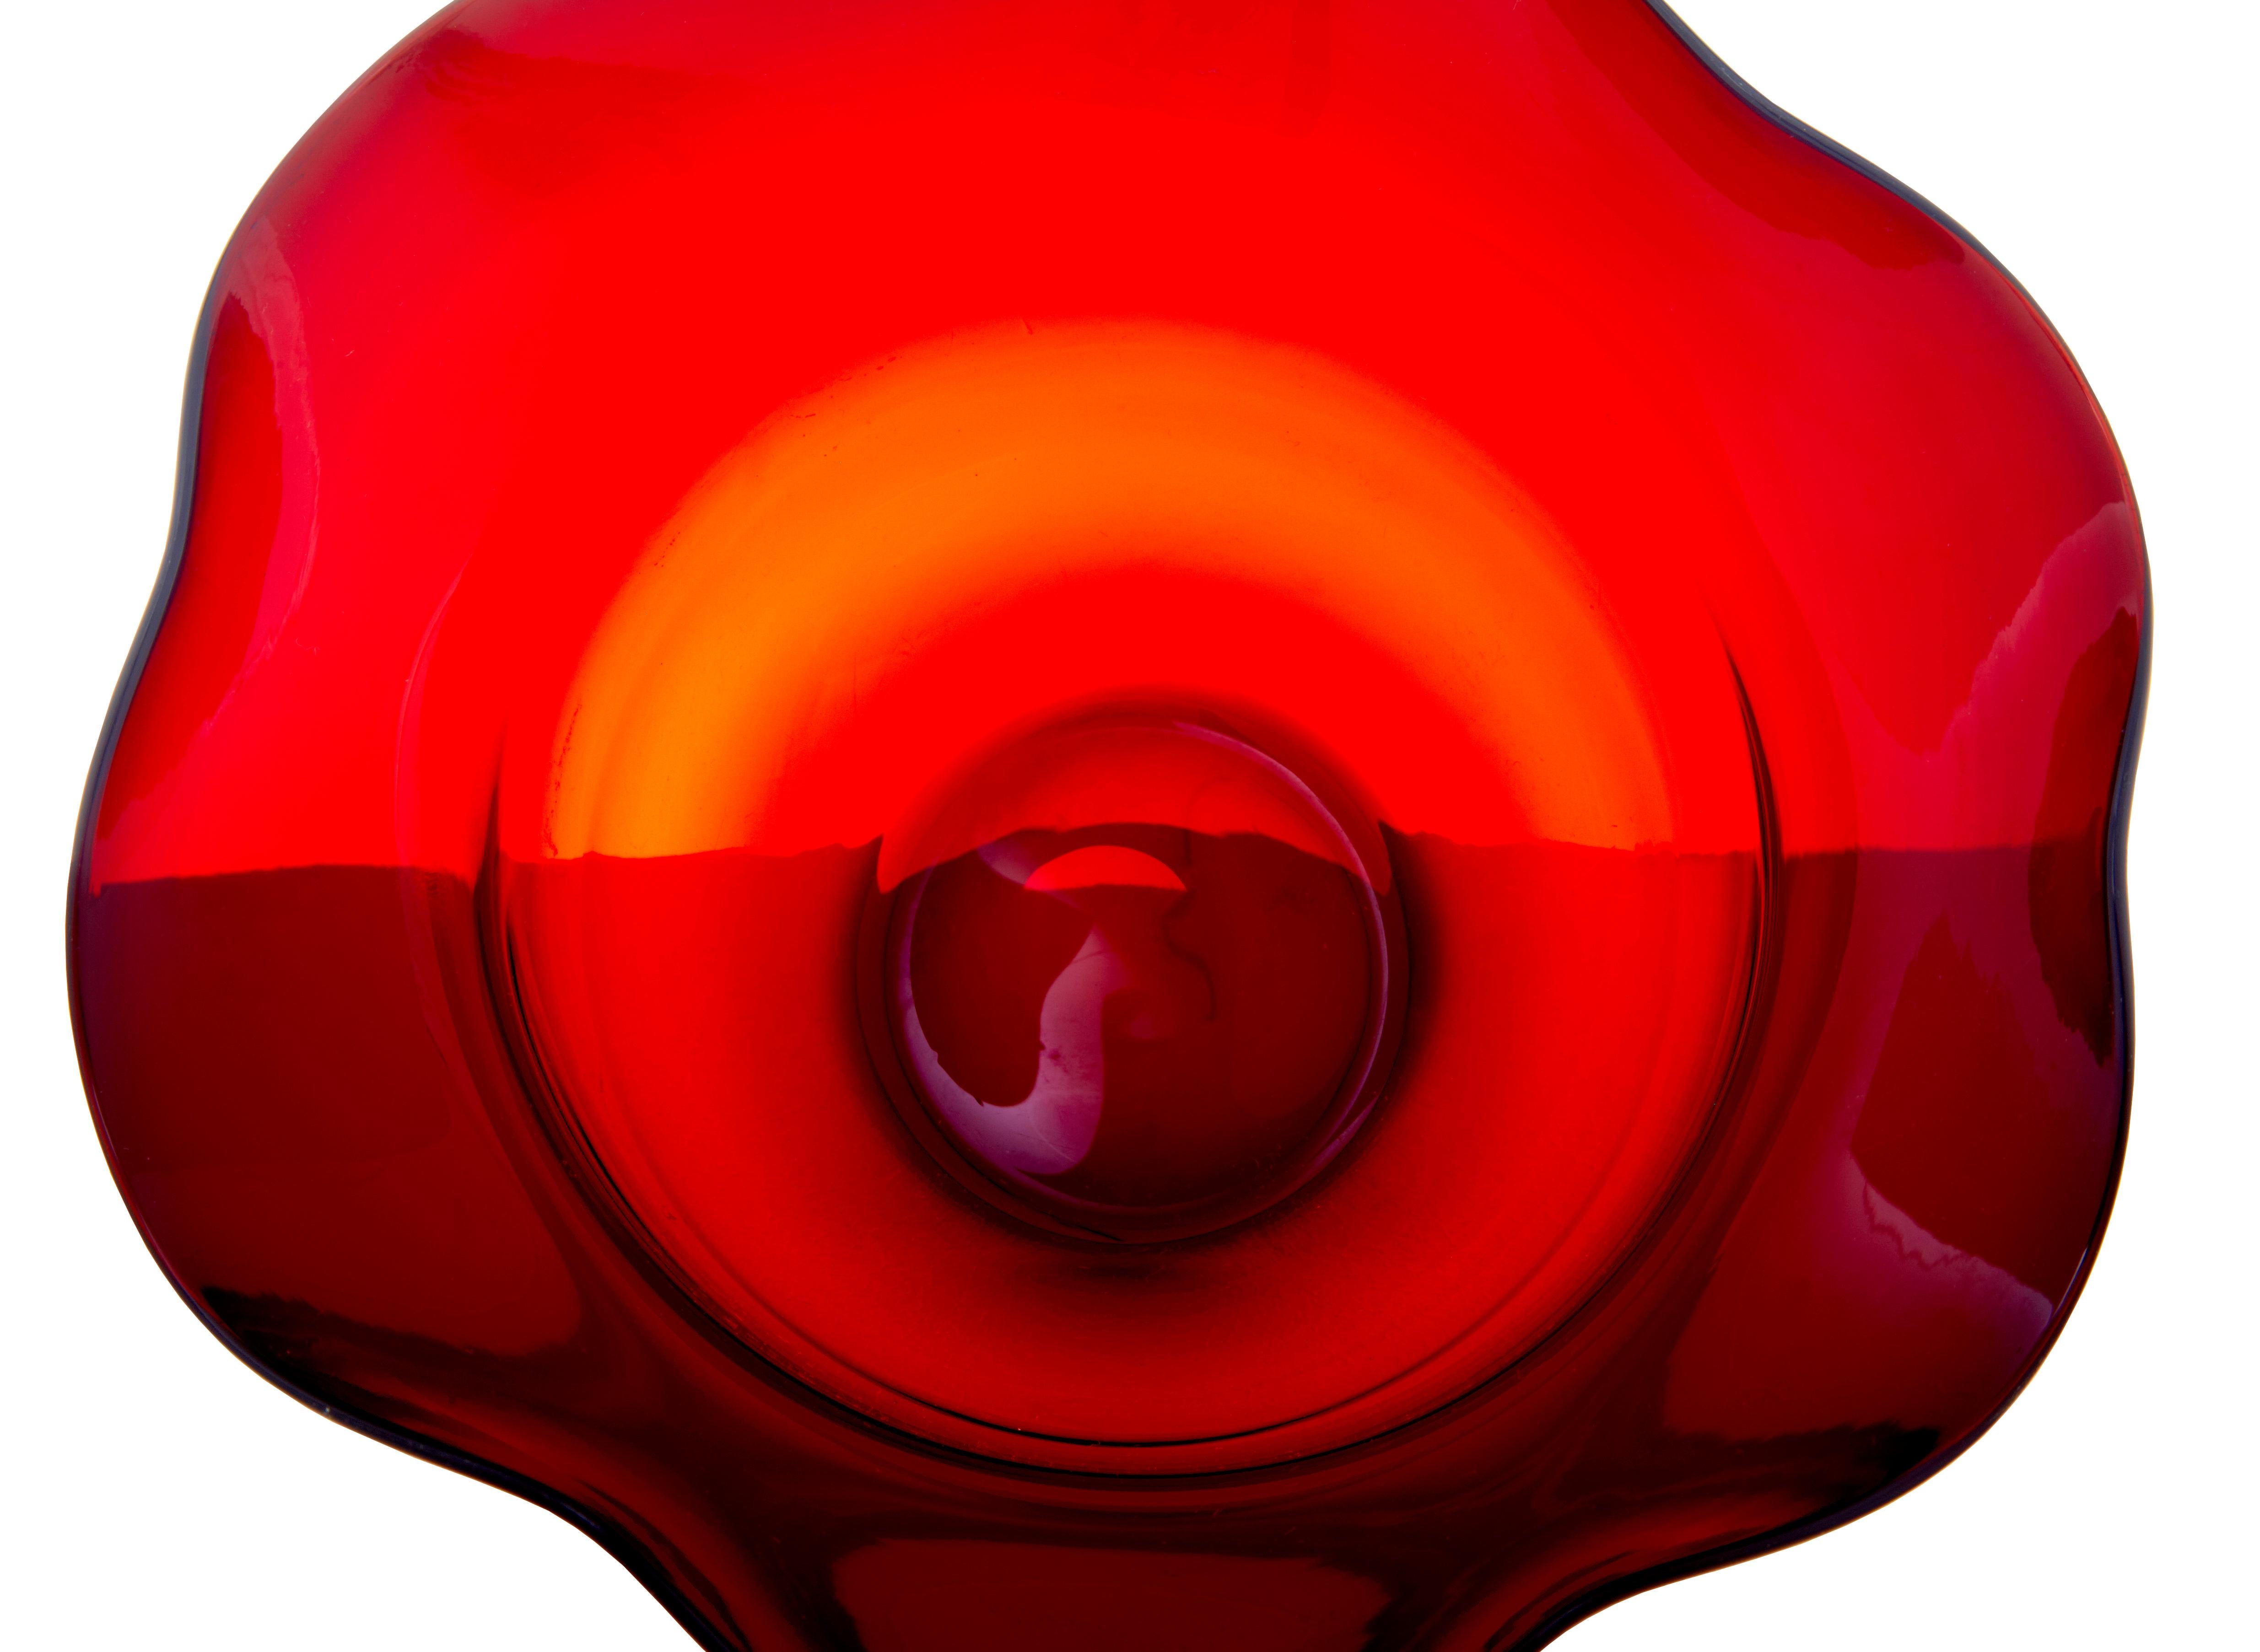 Swedish Mid 20th century shaped red art glass vase by Monica Bratt For Sale